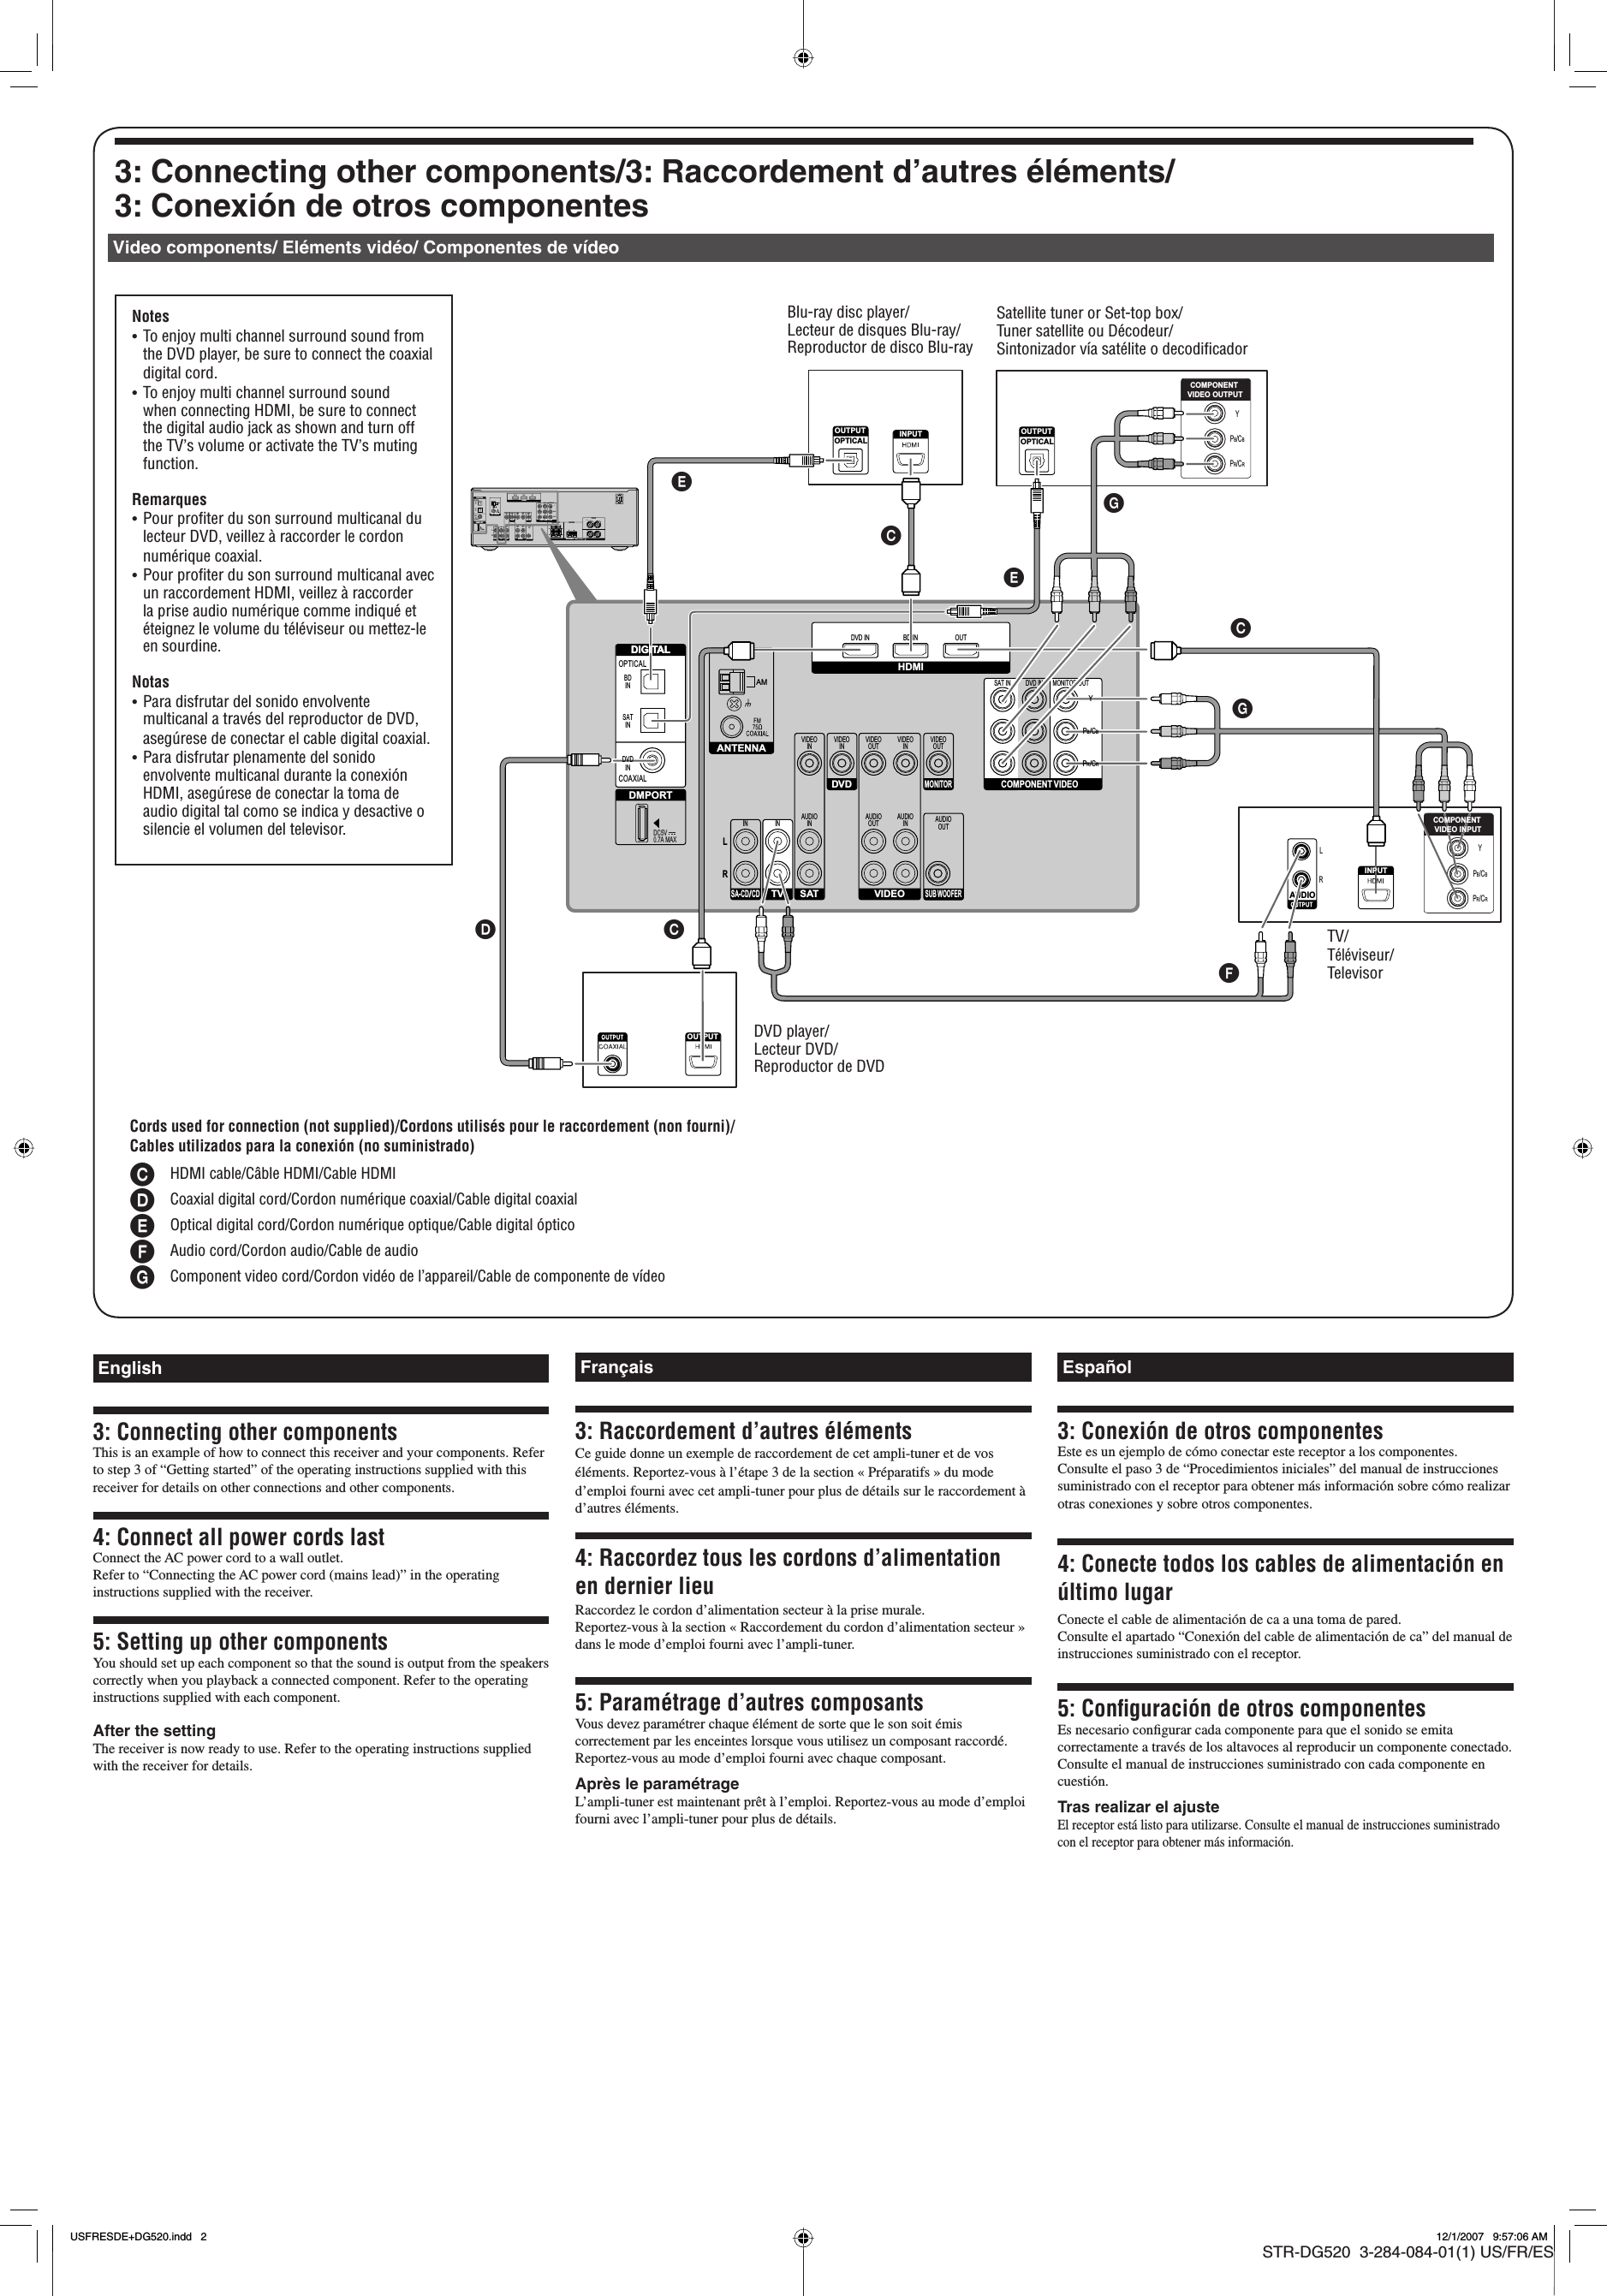 Page 2 of 2 - Sony STR-DG520 User Manual Quick Start Guide STRDG520 Qsg